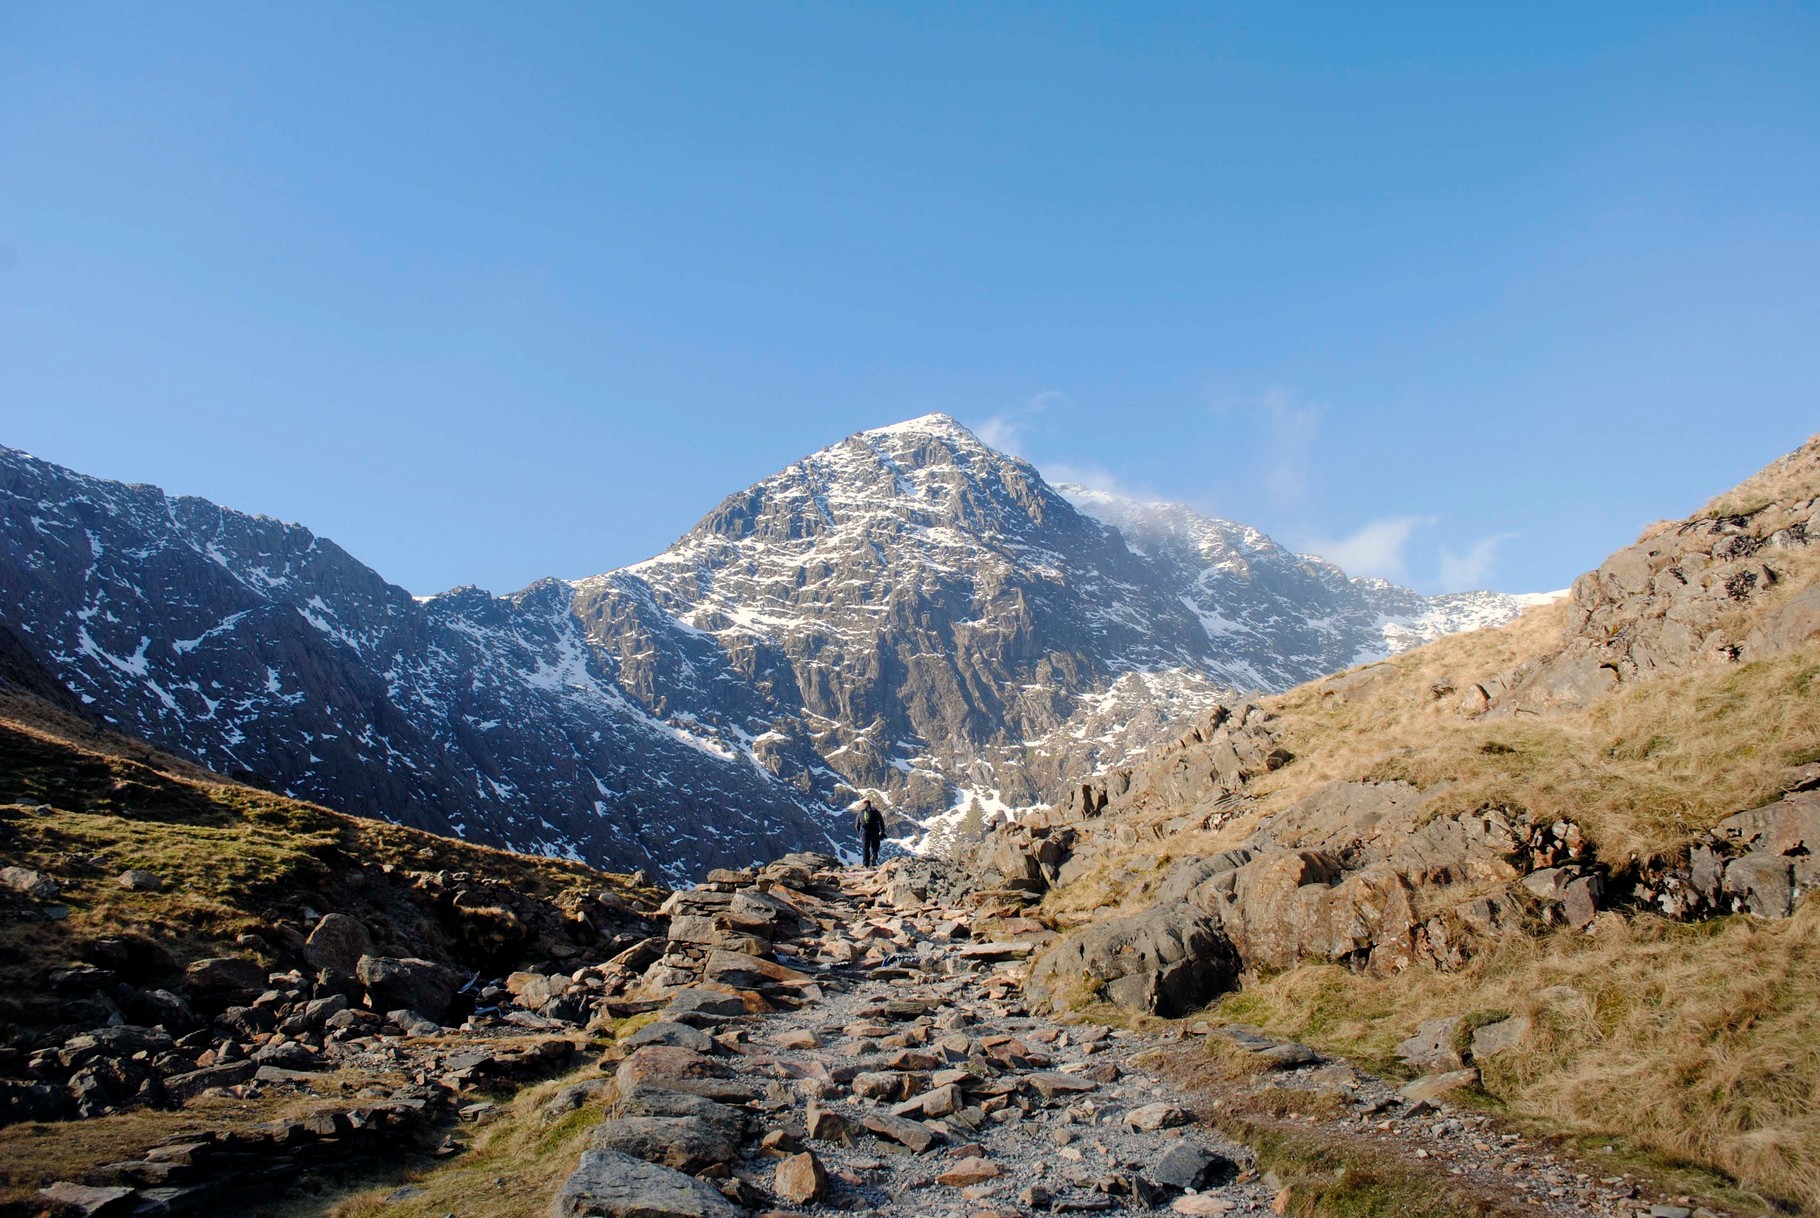 Man versus the Mountain- Snowden, Wales. 